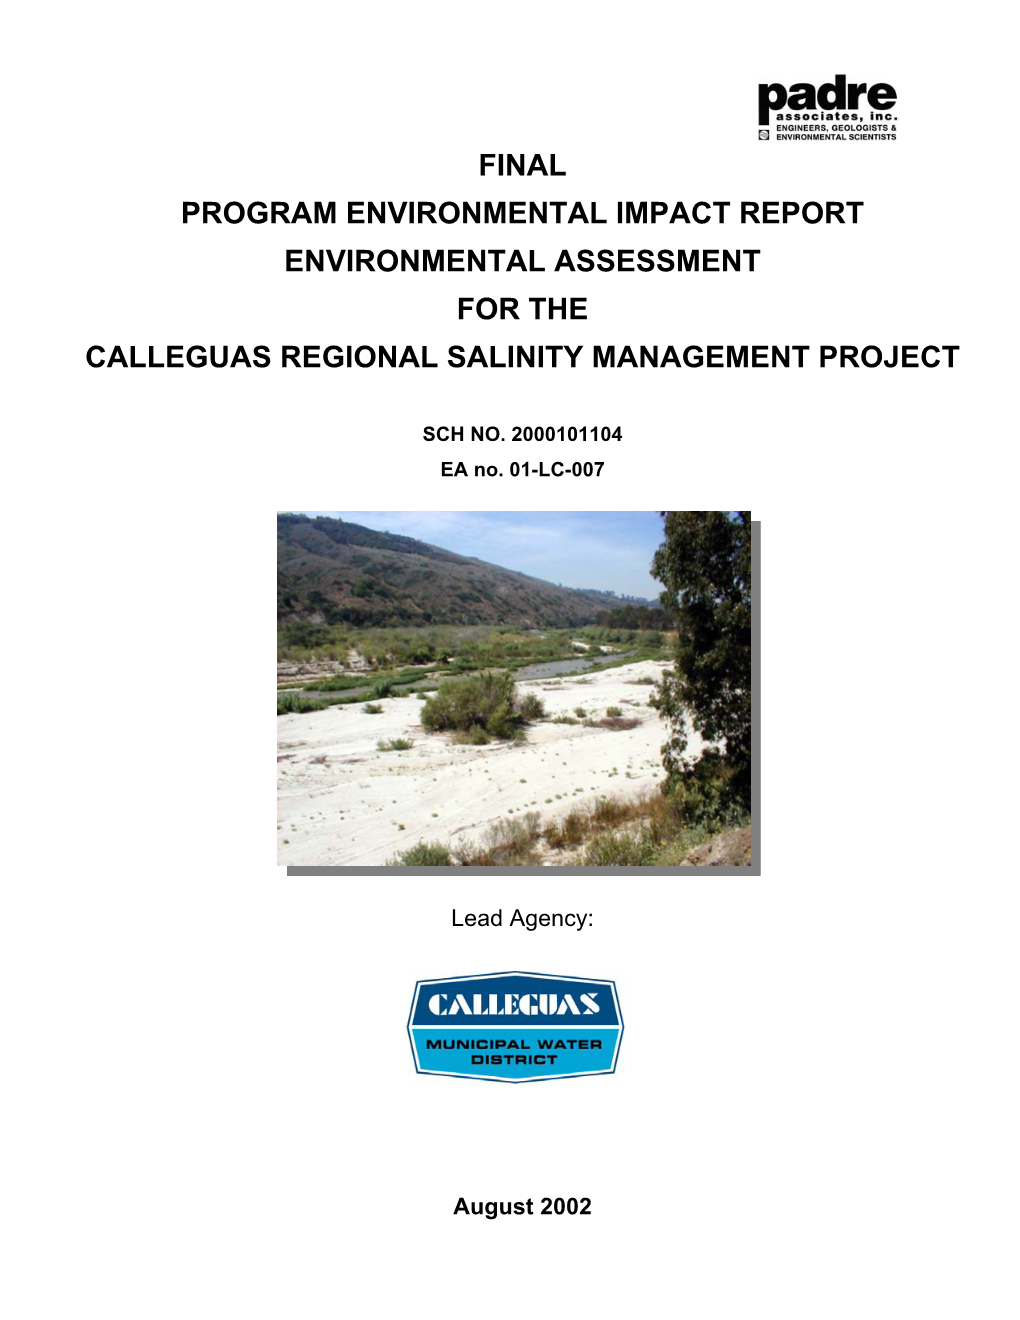 Final Program Environmental Impact Report Environmental Assessment for the Calleguas Regional Salinity Management Project